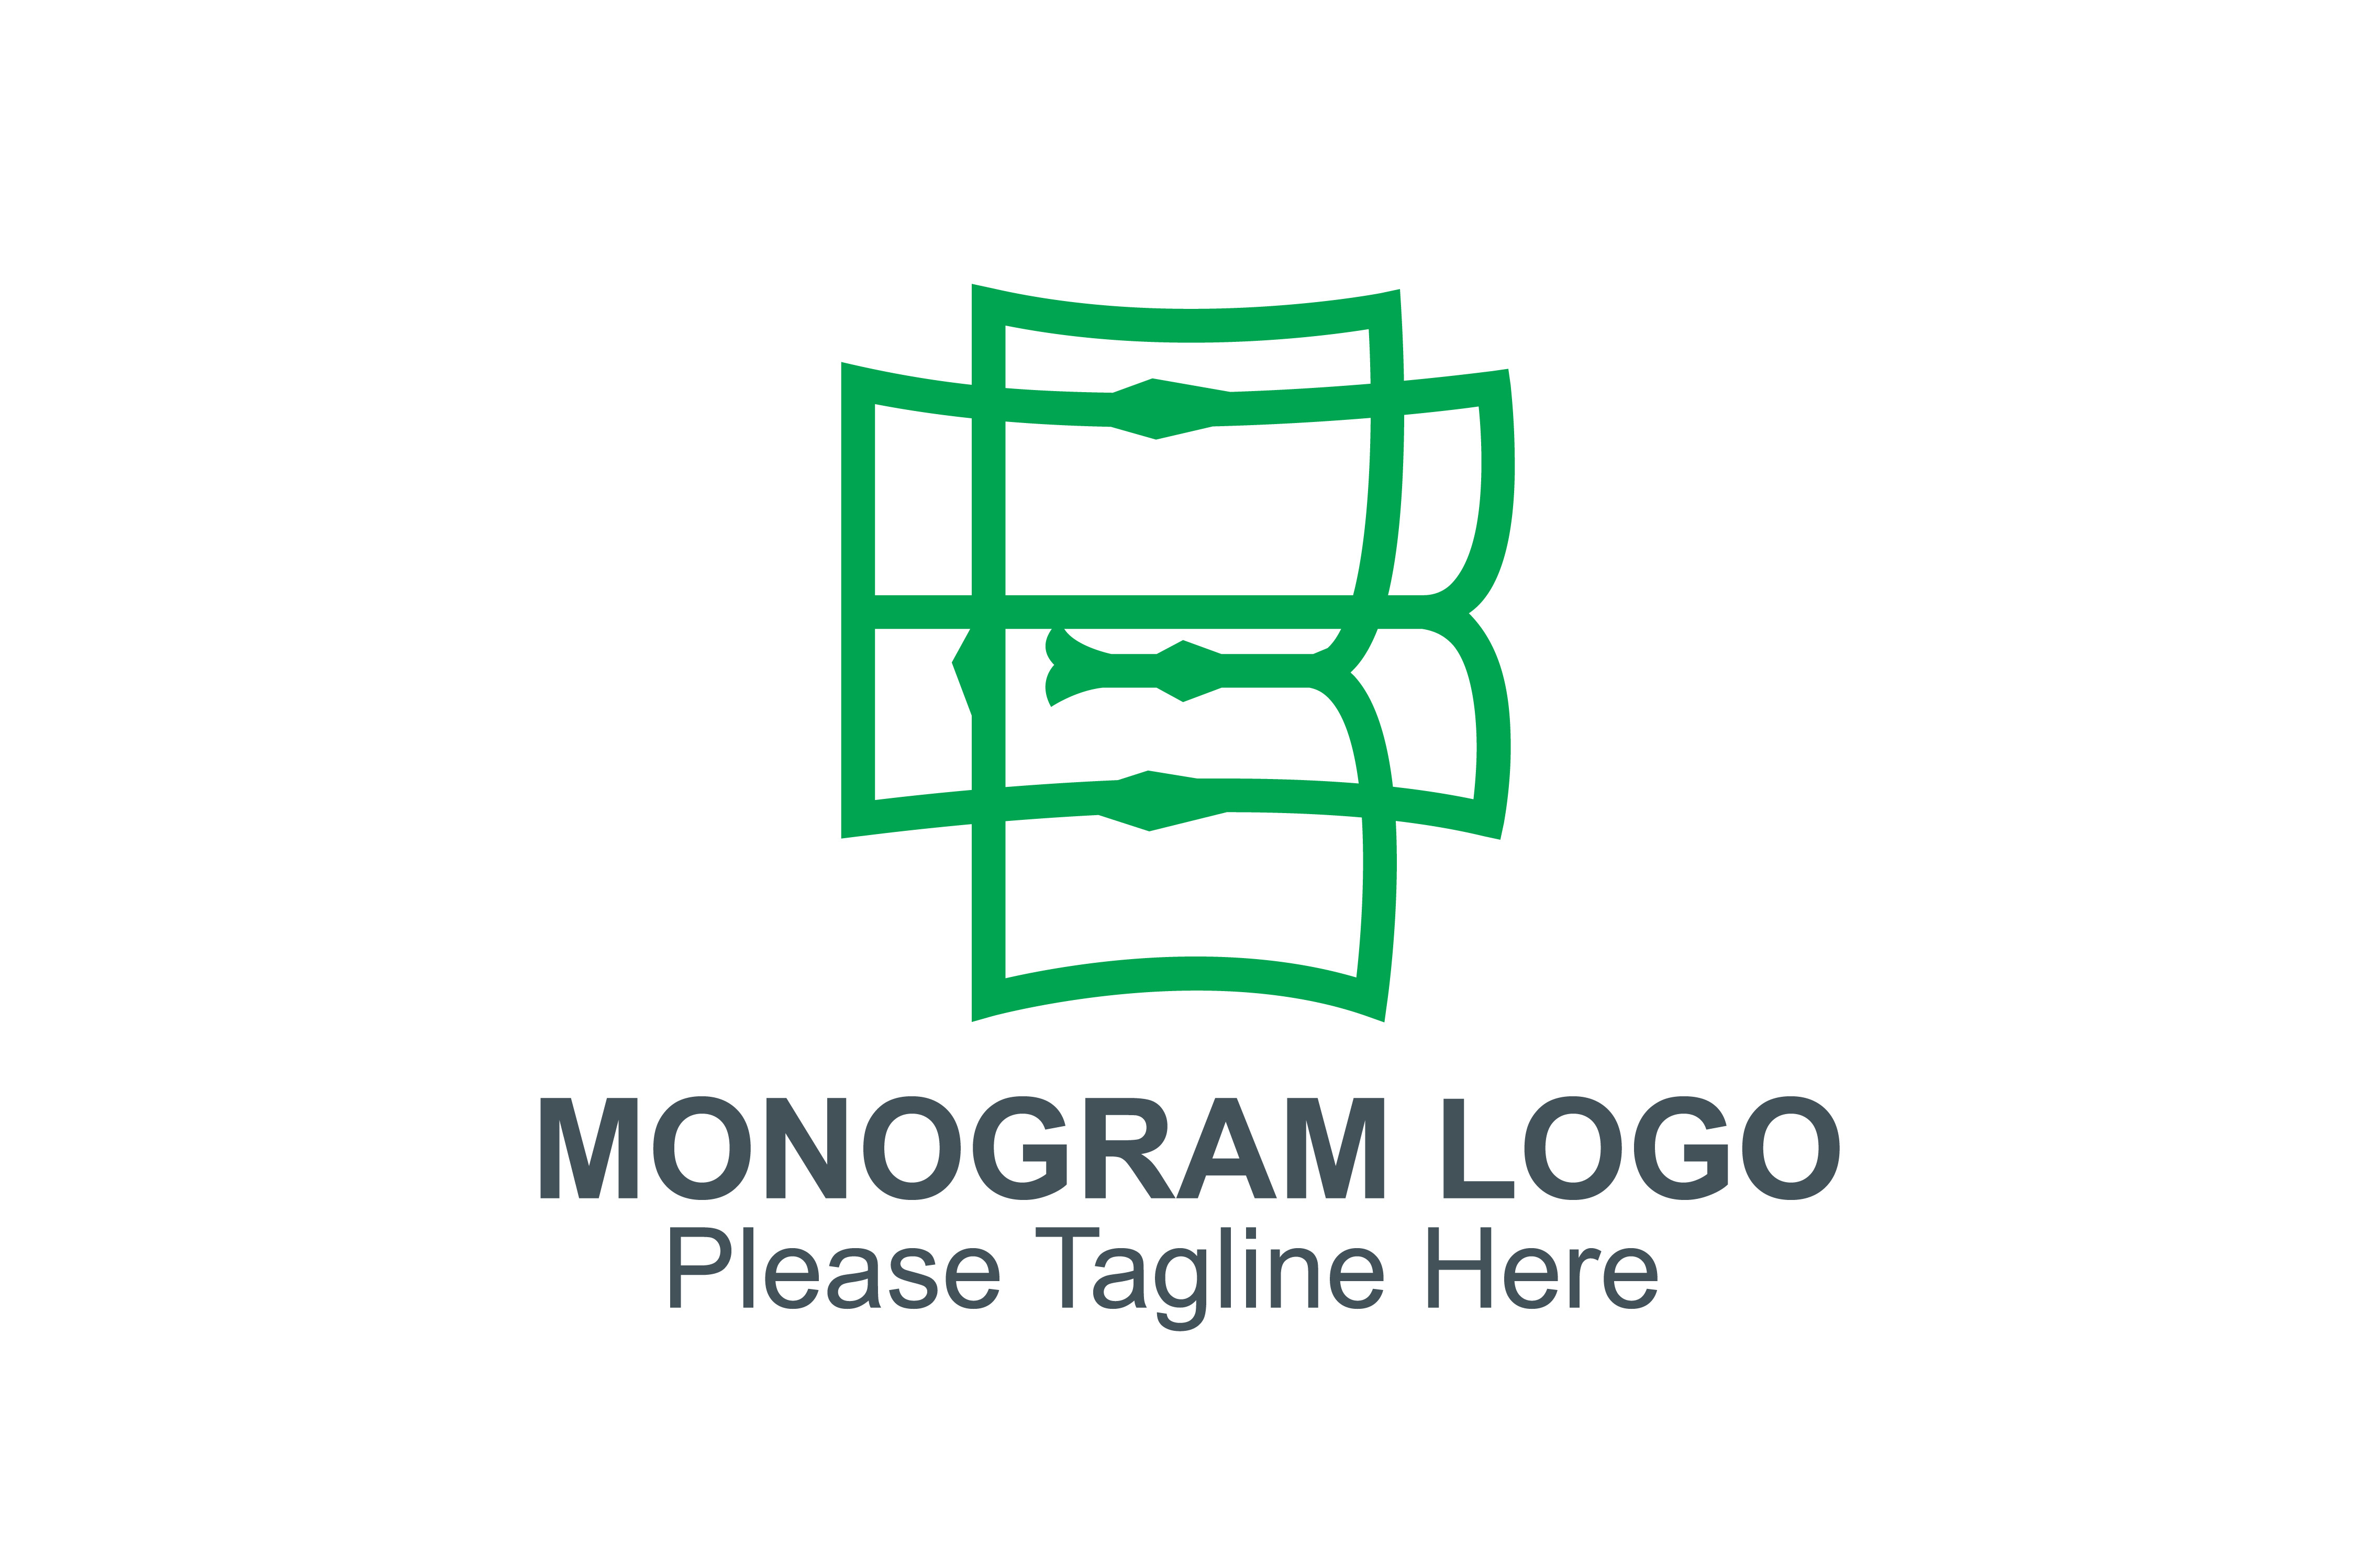 Monogram BB Logo V2 Graphic by Greenlines Studios · Creative Fabrica